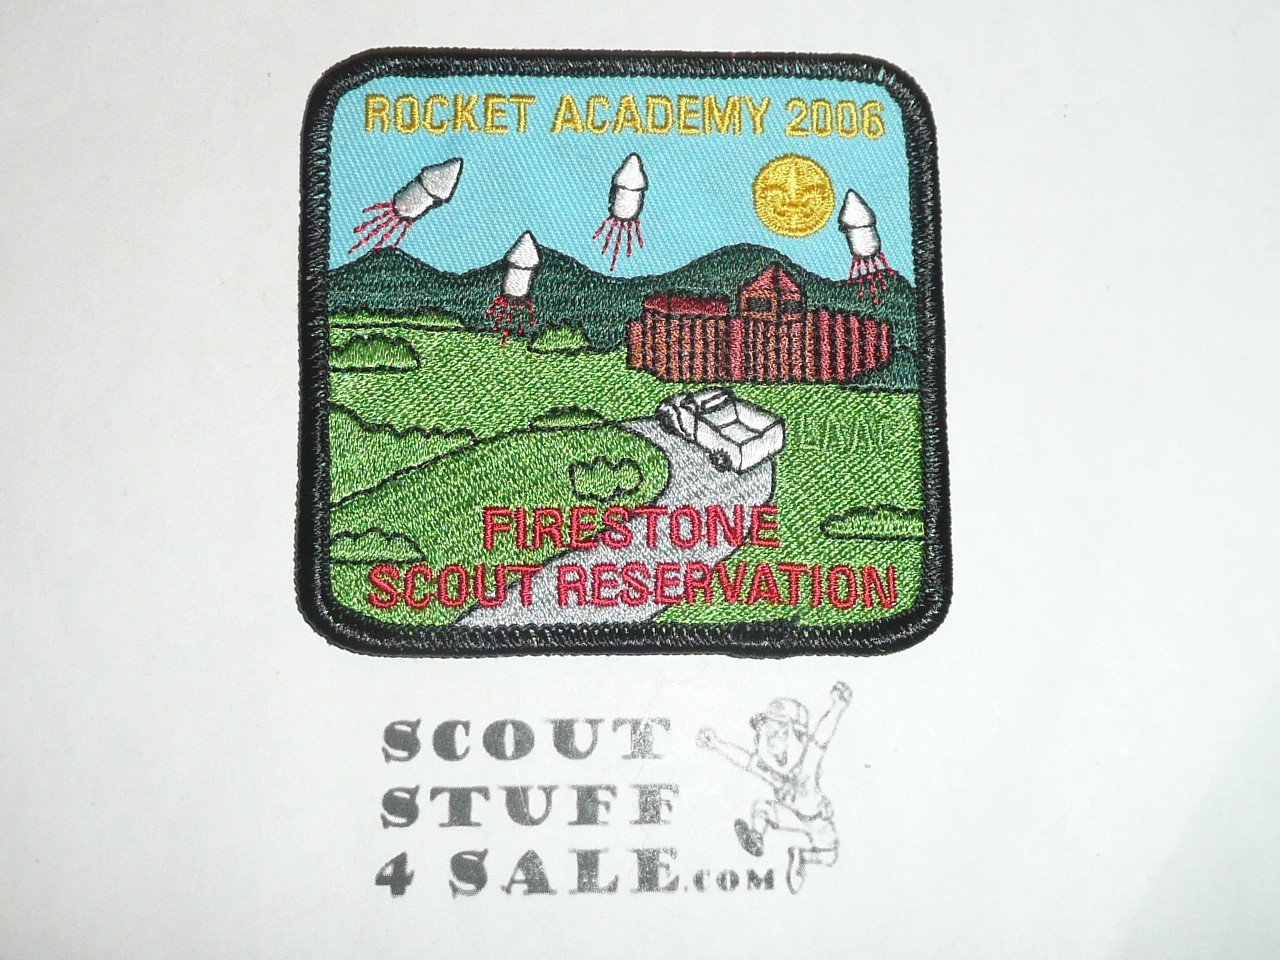 Firestone Scout Reservation, Rocket Academy STAFF Patch, 2006